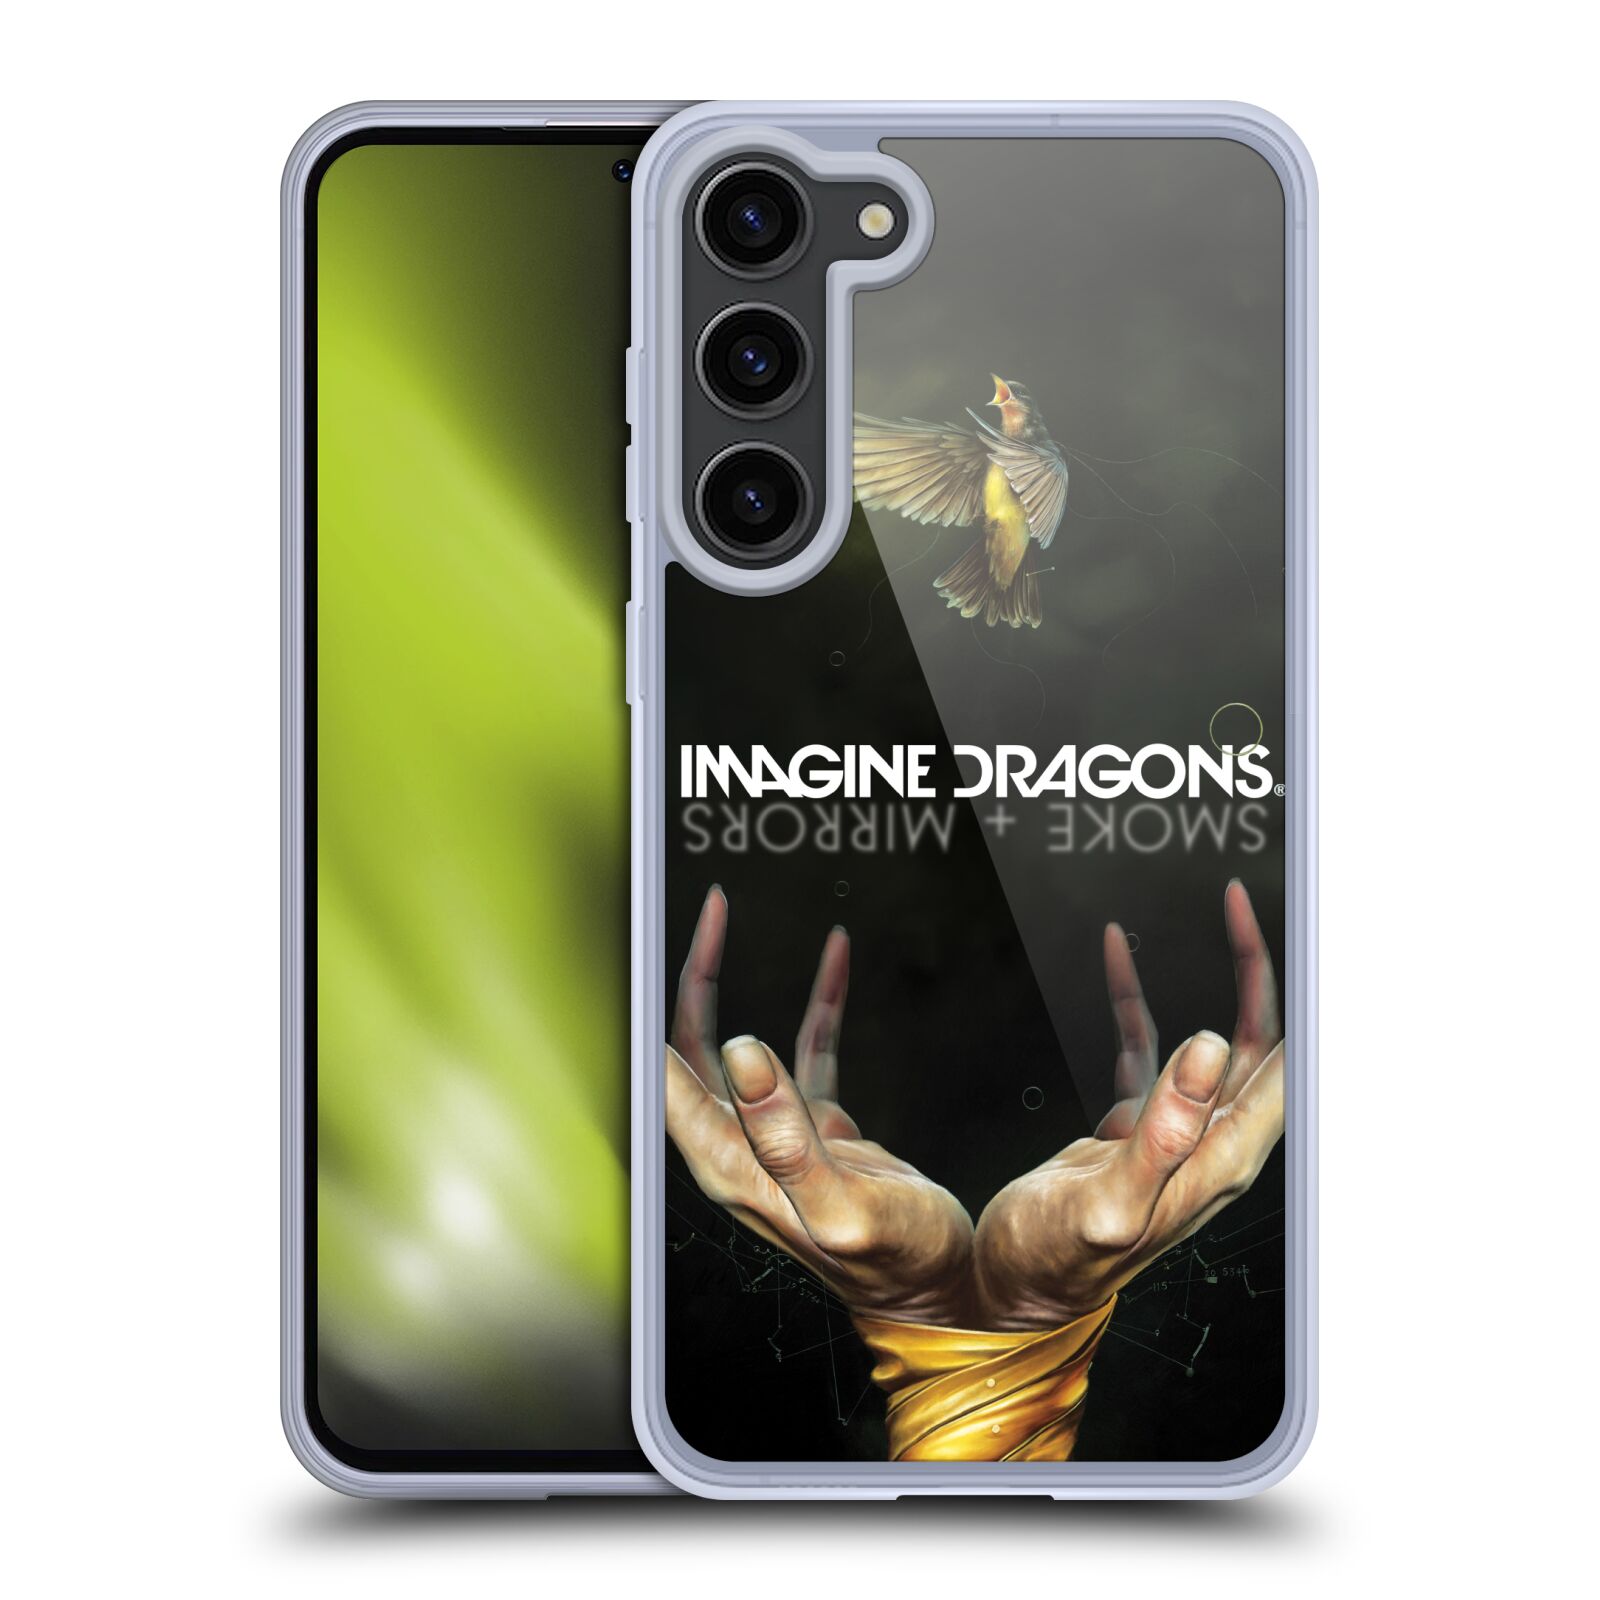 Silikonové pouzdro na mobil Samsung Galaxy S23 Plus - Imagine Dragons - Smoke And Mirrors (Silikonový kryt, obal, pouzdro na mobilní telefon Samsung Galaxy S23 Plus s licencovaným motivem Imagine Dragons - Smoke And Mirrors)